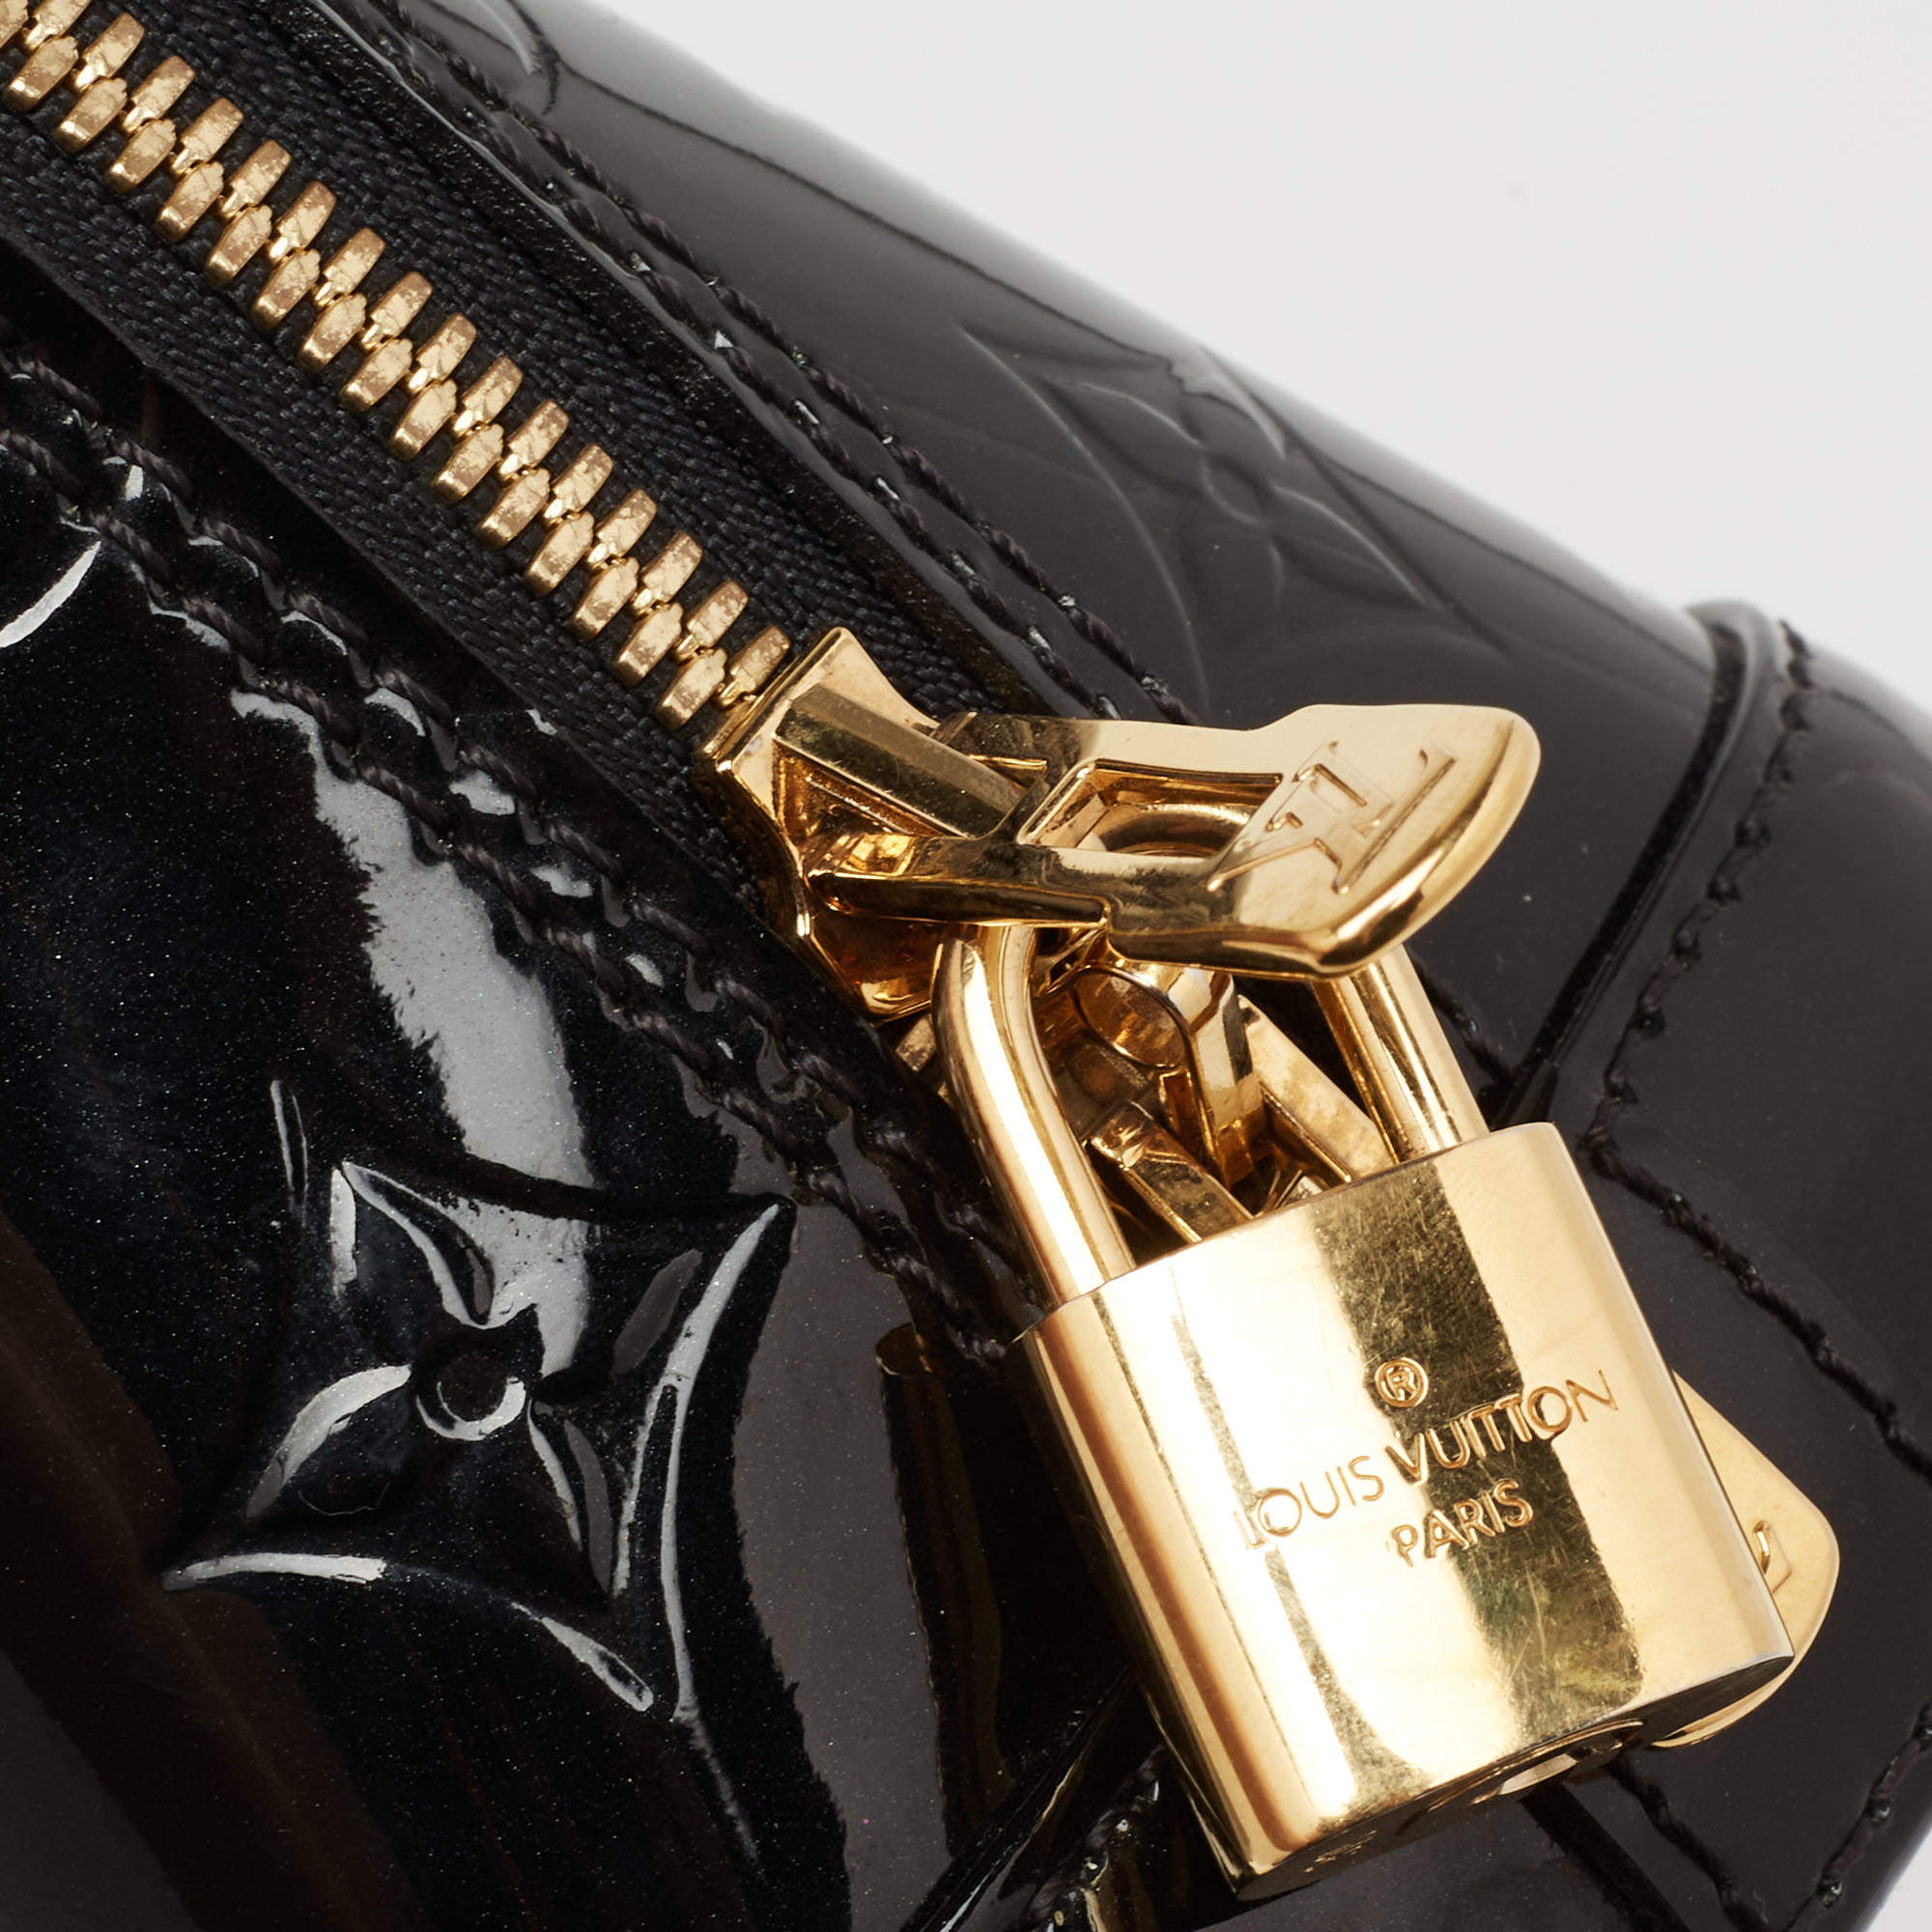 Alma bb leather handbag Louis Vuitton Black in Leather - 34308778